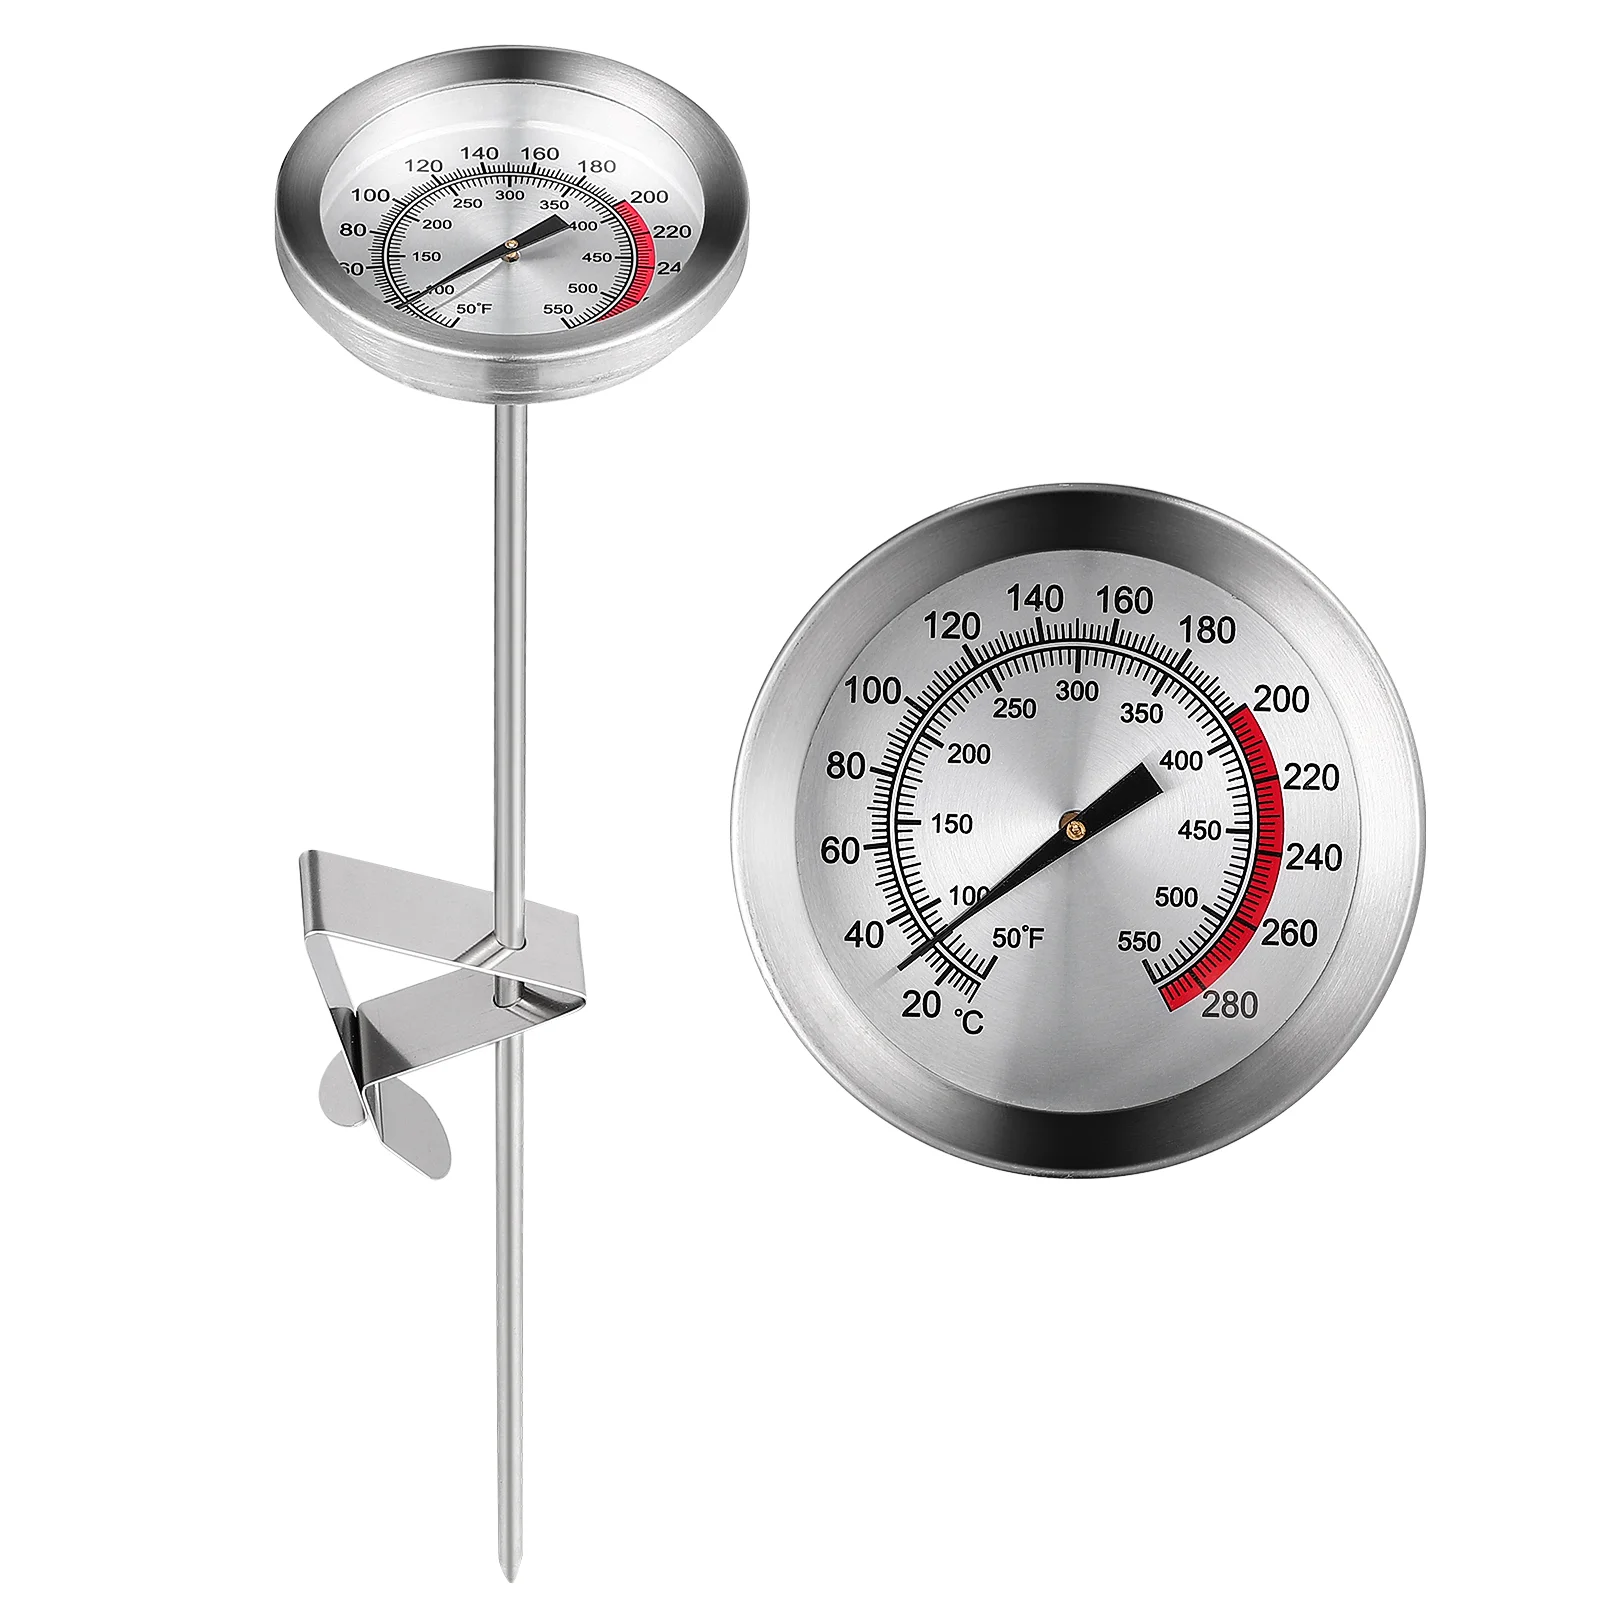 Кулинарный Термометр Кухонный Термометр для Мяса, считывающий Показания Термометра, Зонд Из Нержавеющей Стали, Термометр Для жарки Индейки, Термометр Изображение 0